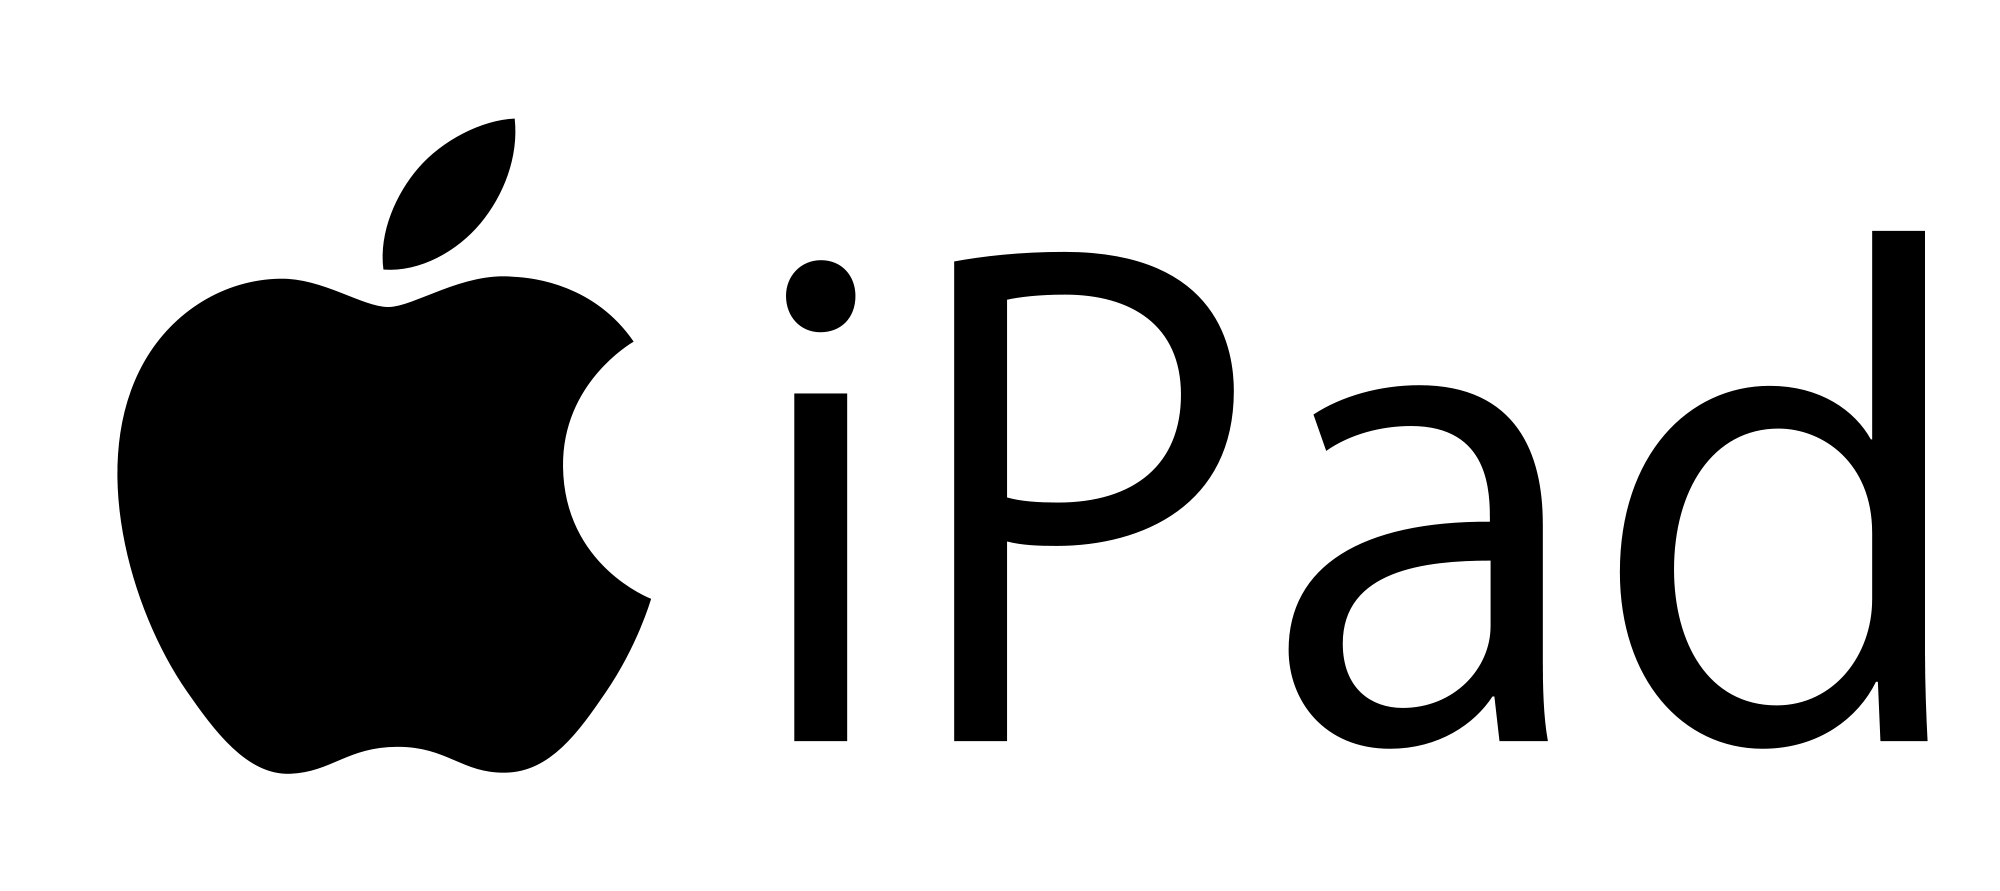 Apple Word Logo - iPad Logo, iPad Symbol Meaning, History and Evolution